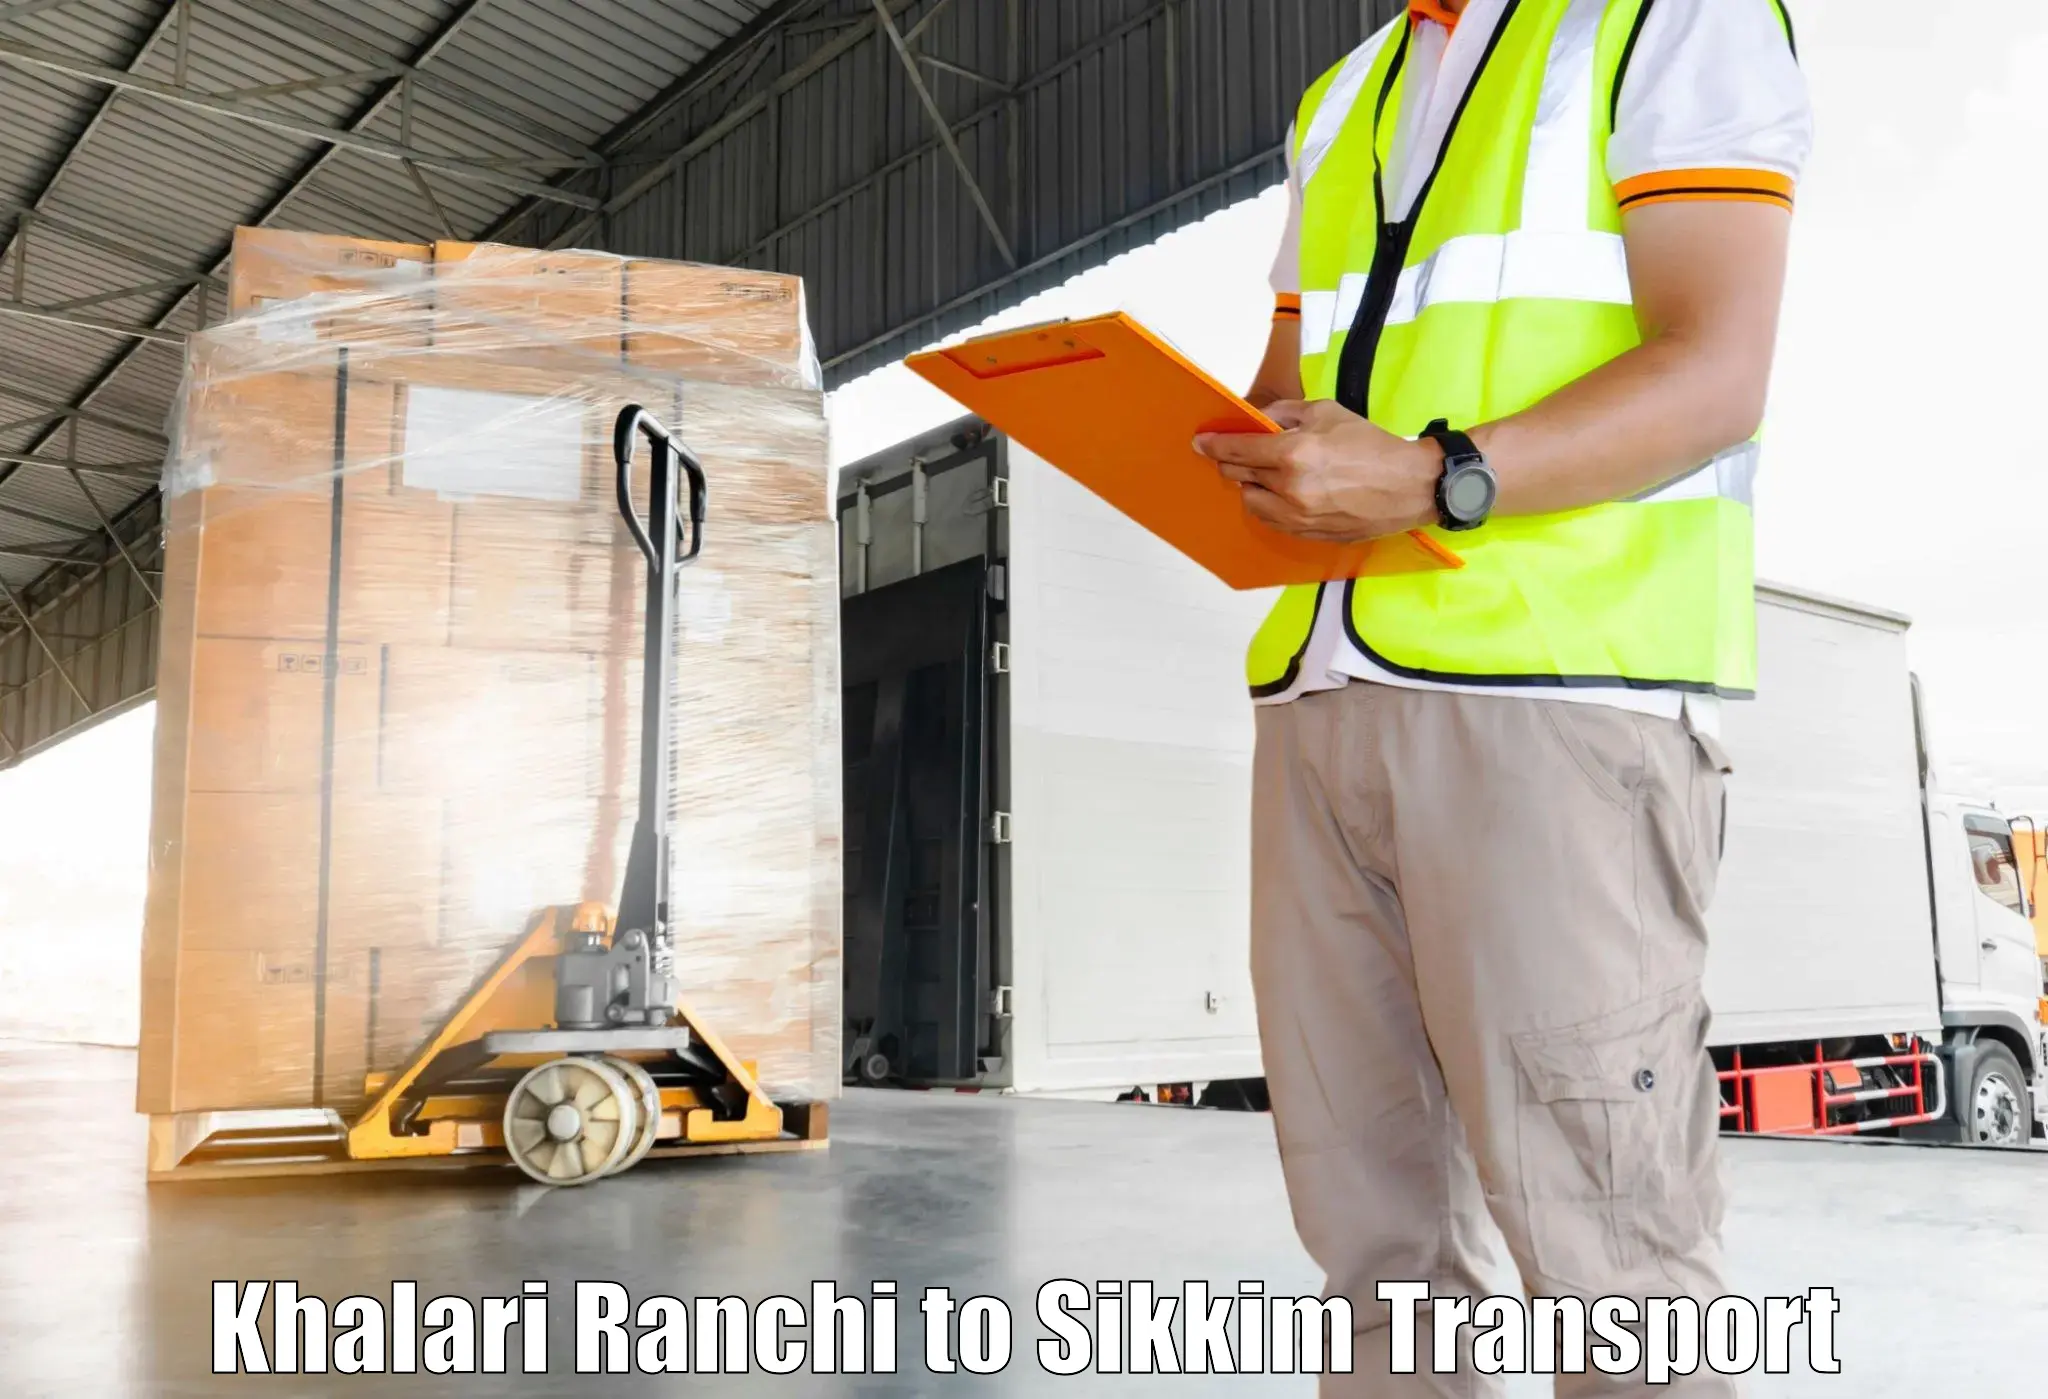 Vehicle transport services Khalari Ranchi to Gangtok